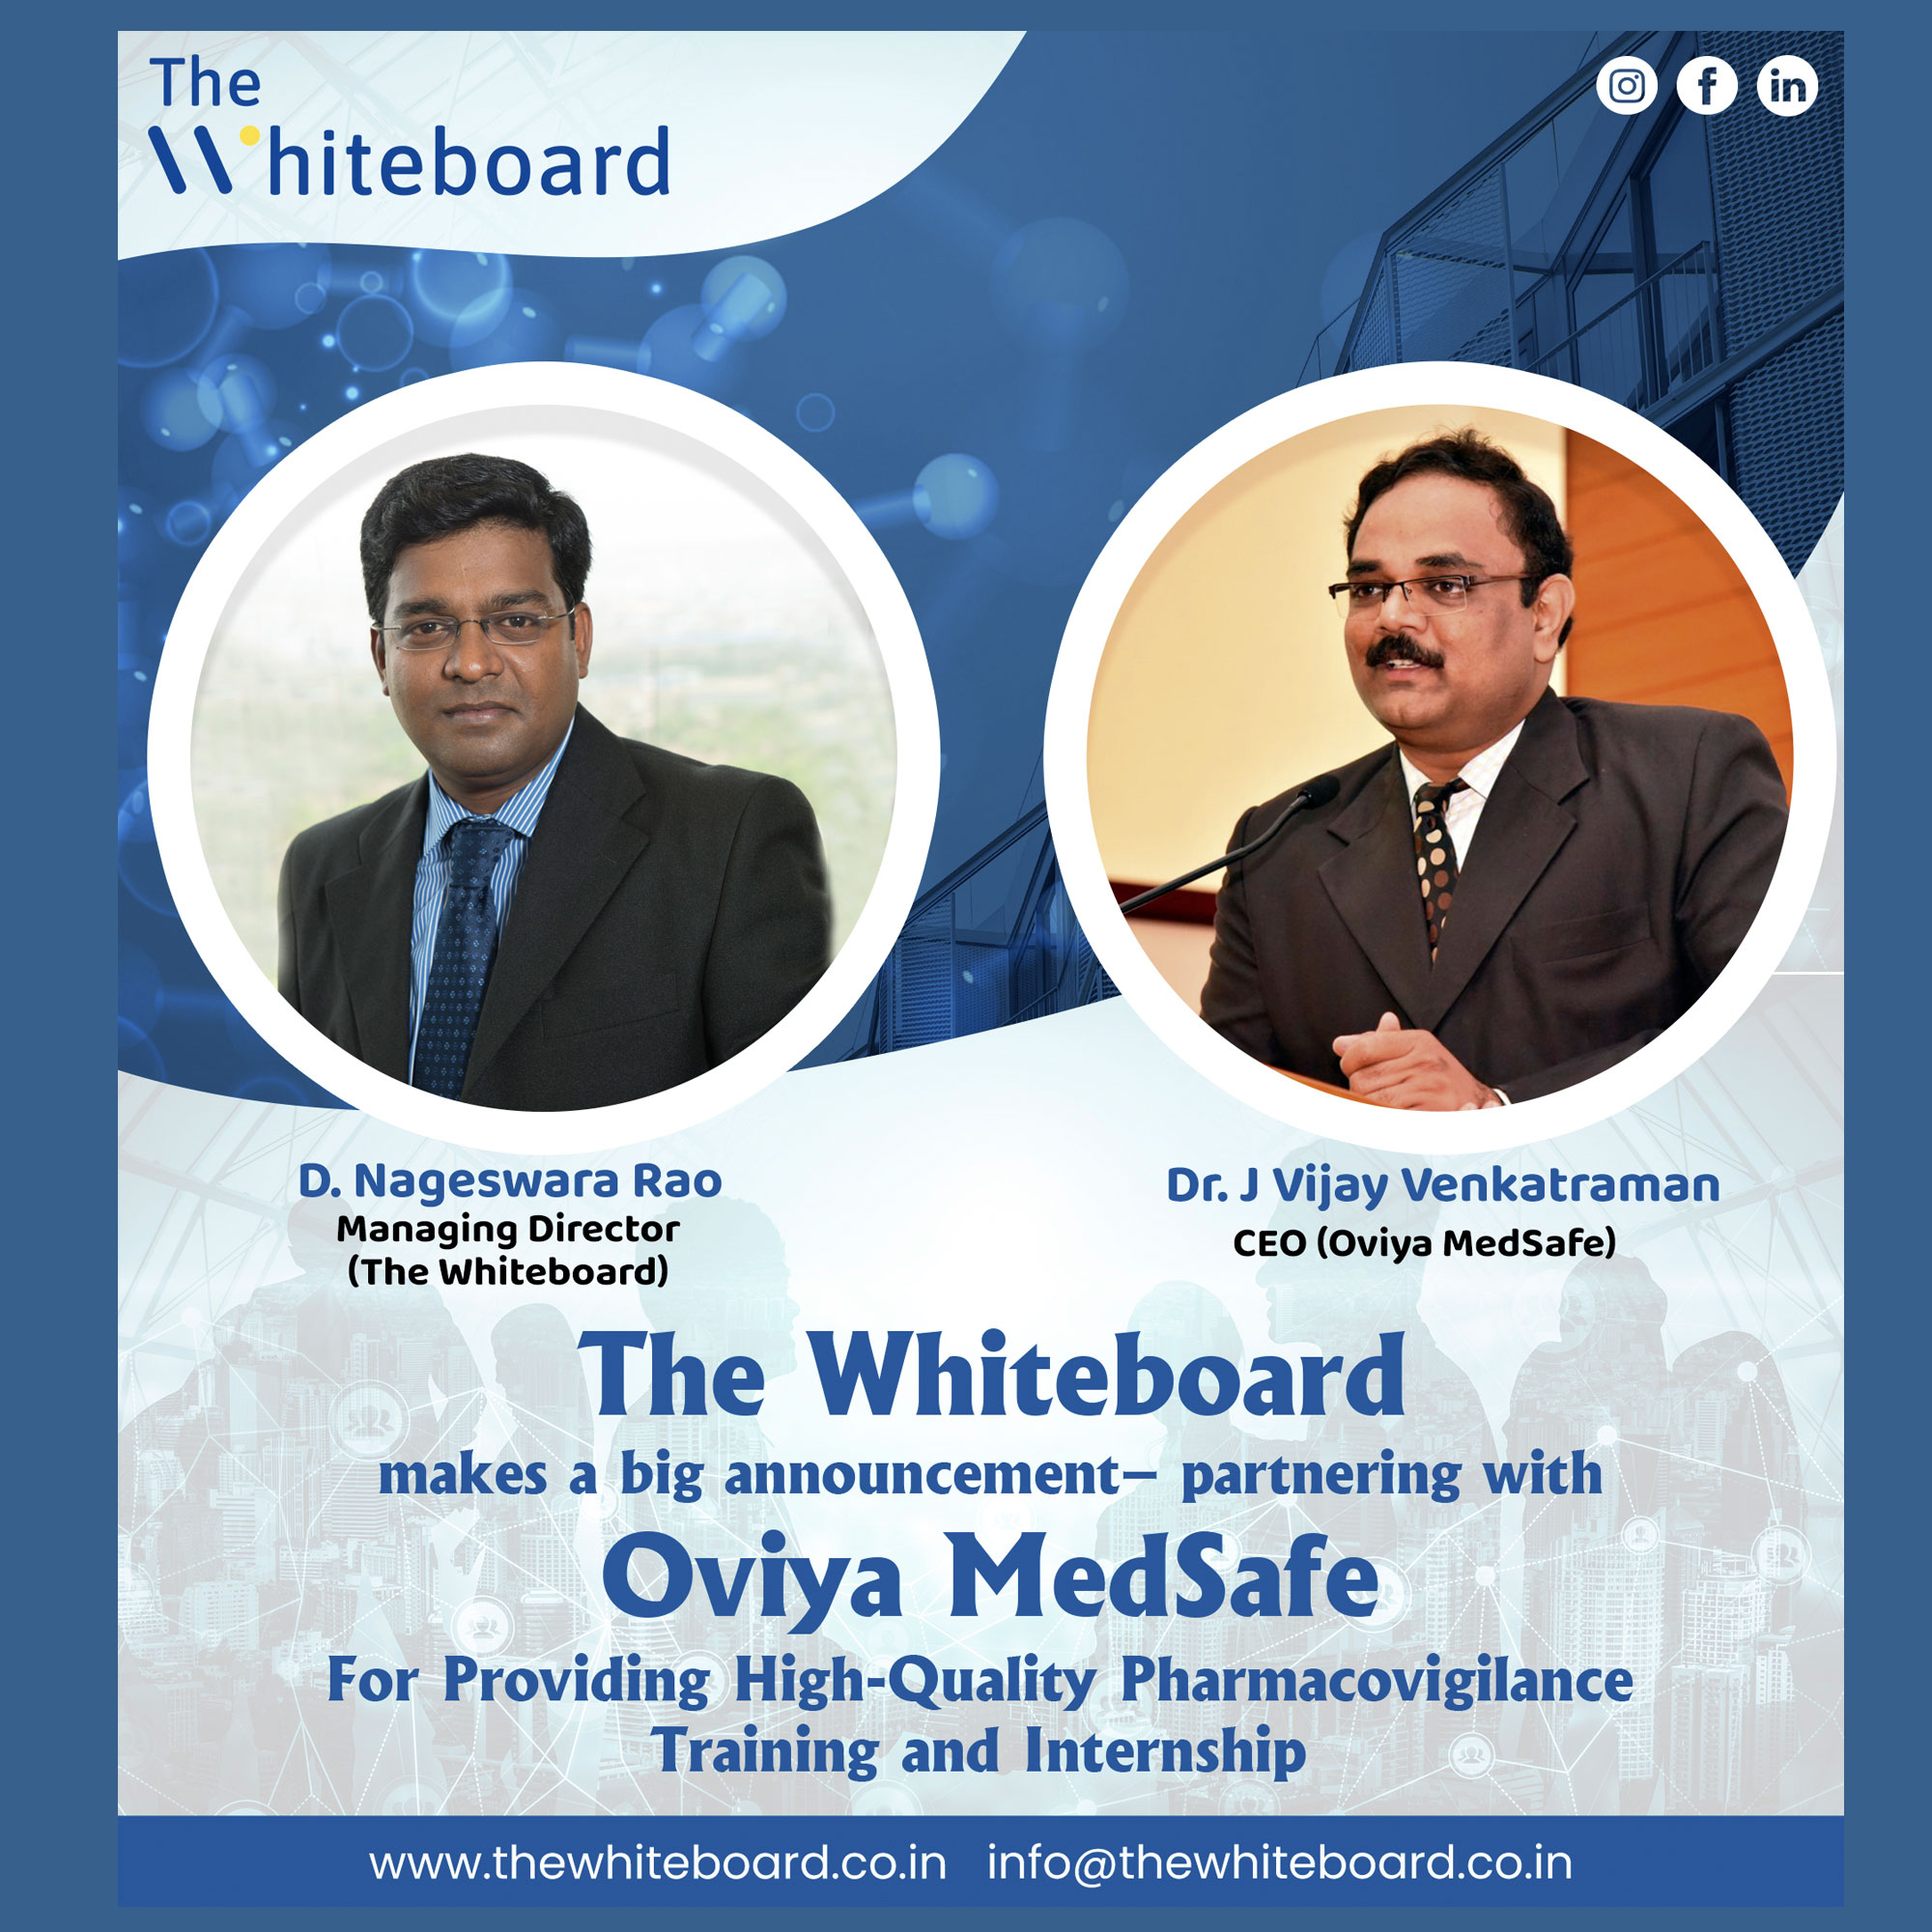 The Whiteboard partering with Oviya MedSafe